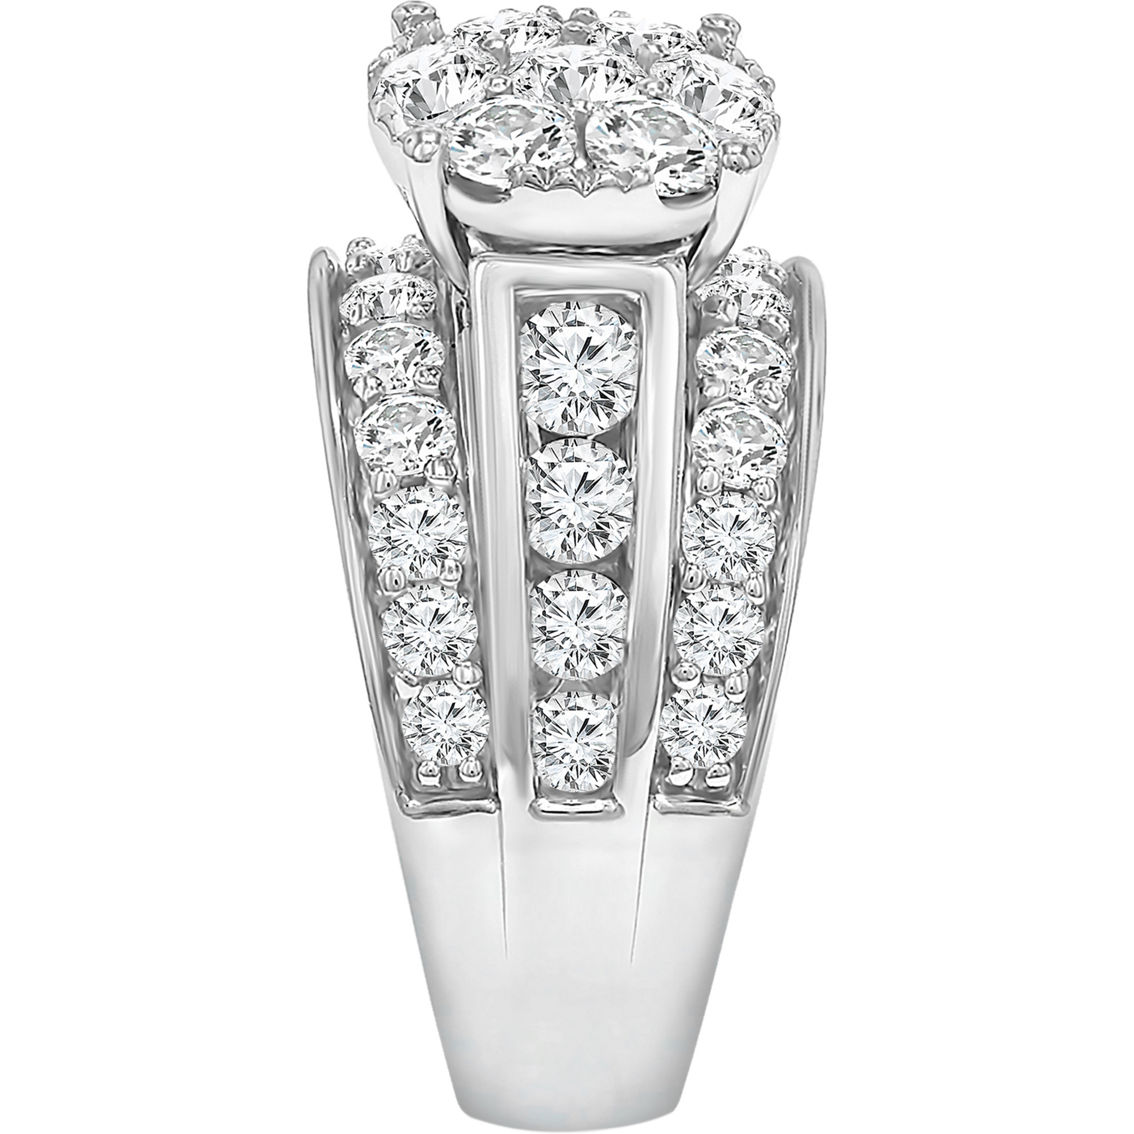 American Rose 10K White Gold 3 CTW Diamond Ring Size 7 - Image 2 of 4